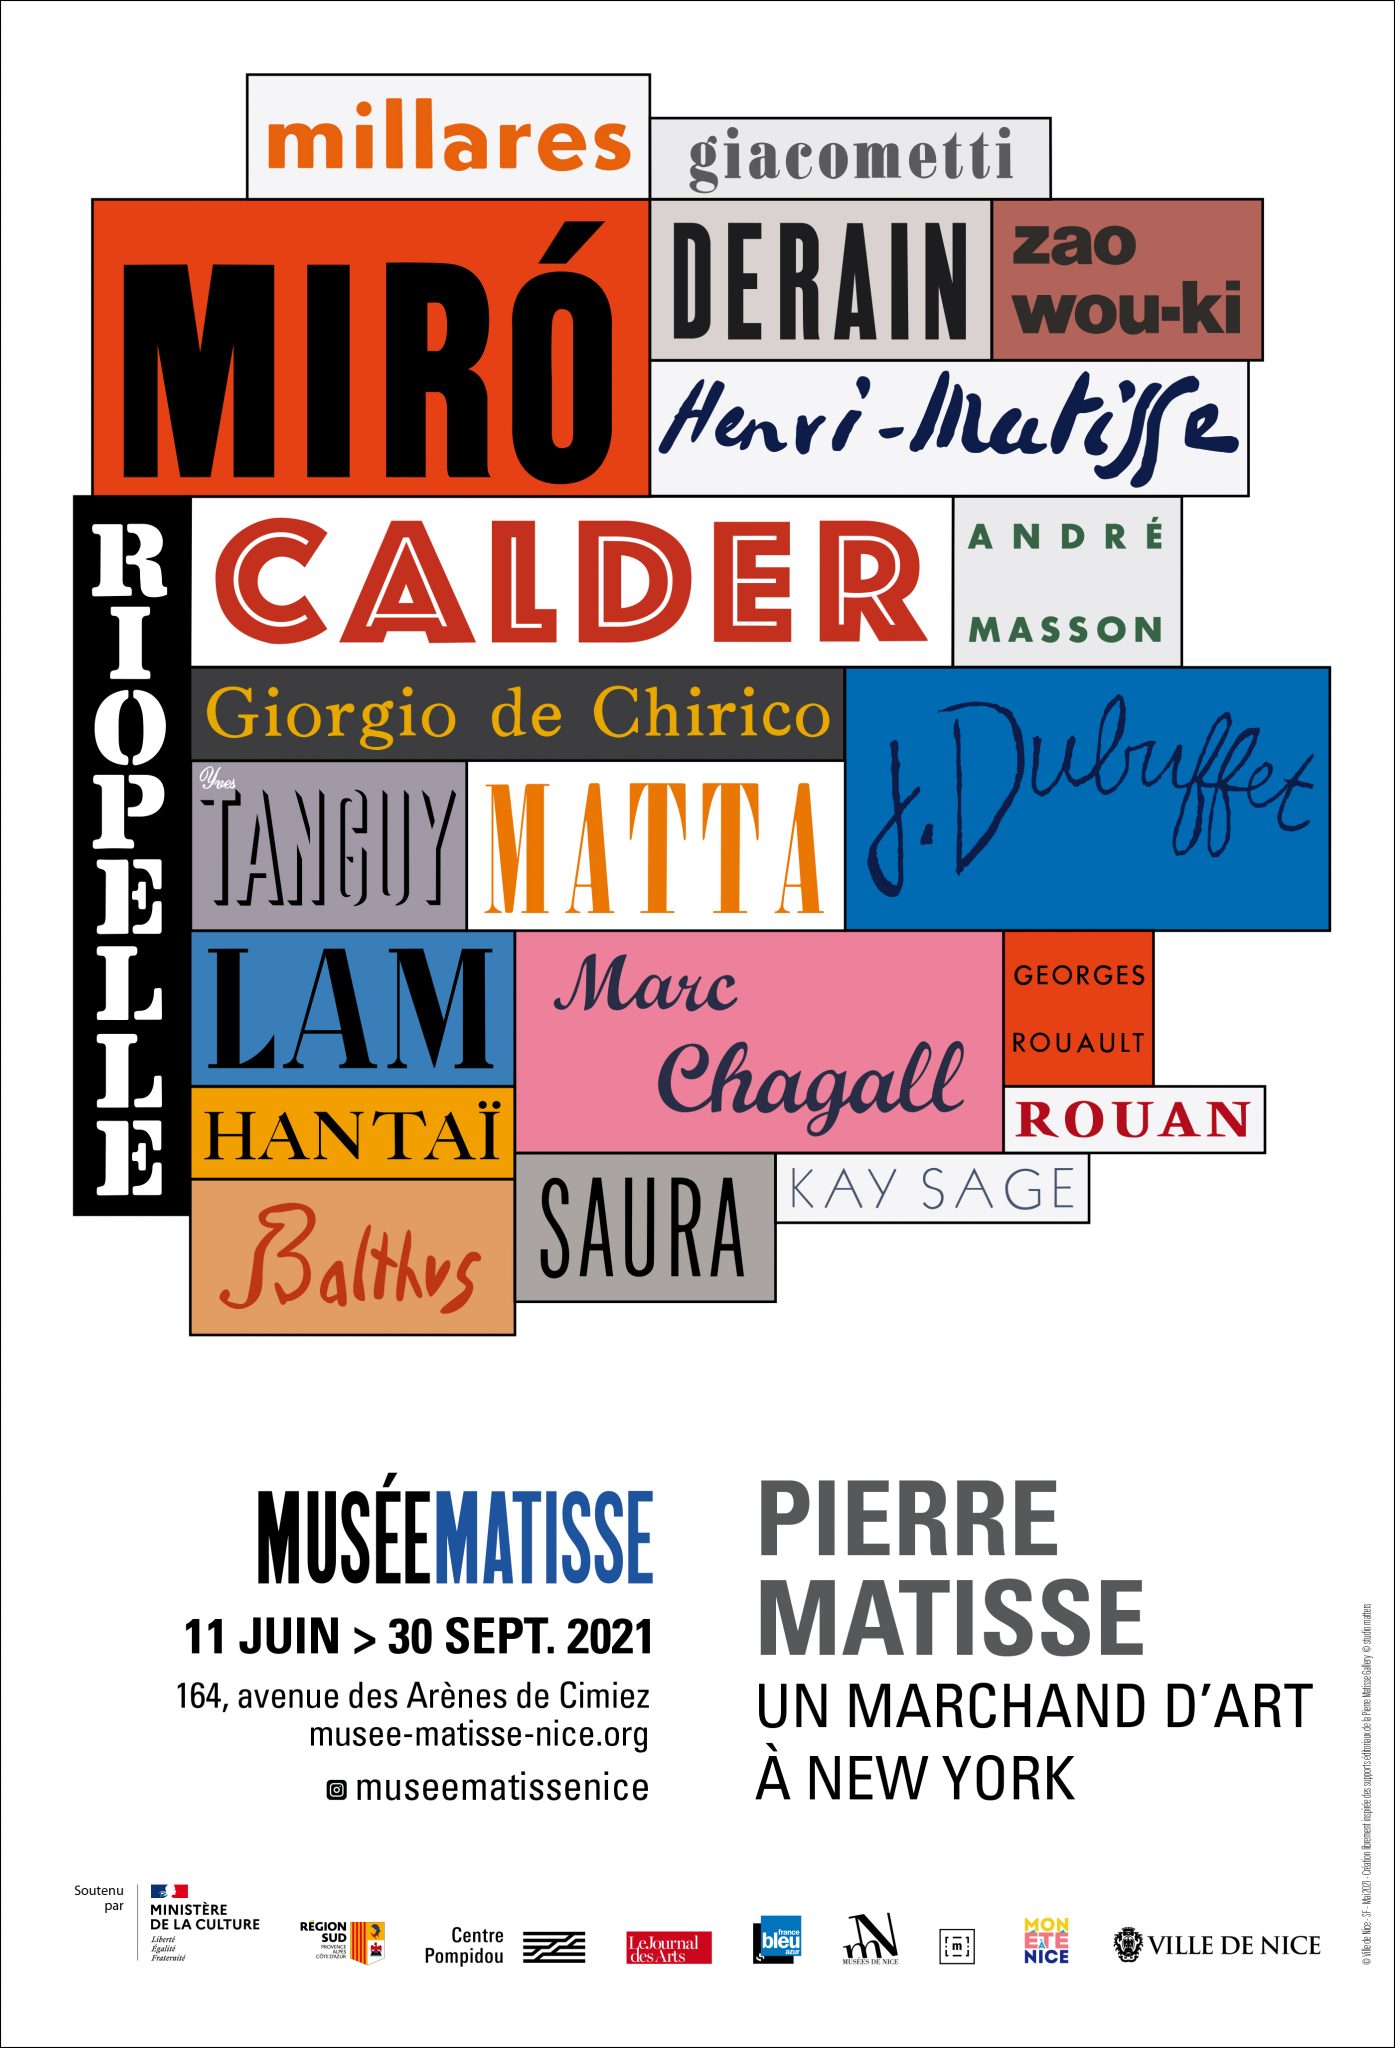 Pierre Matisse, an Art Dealer in New York